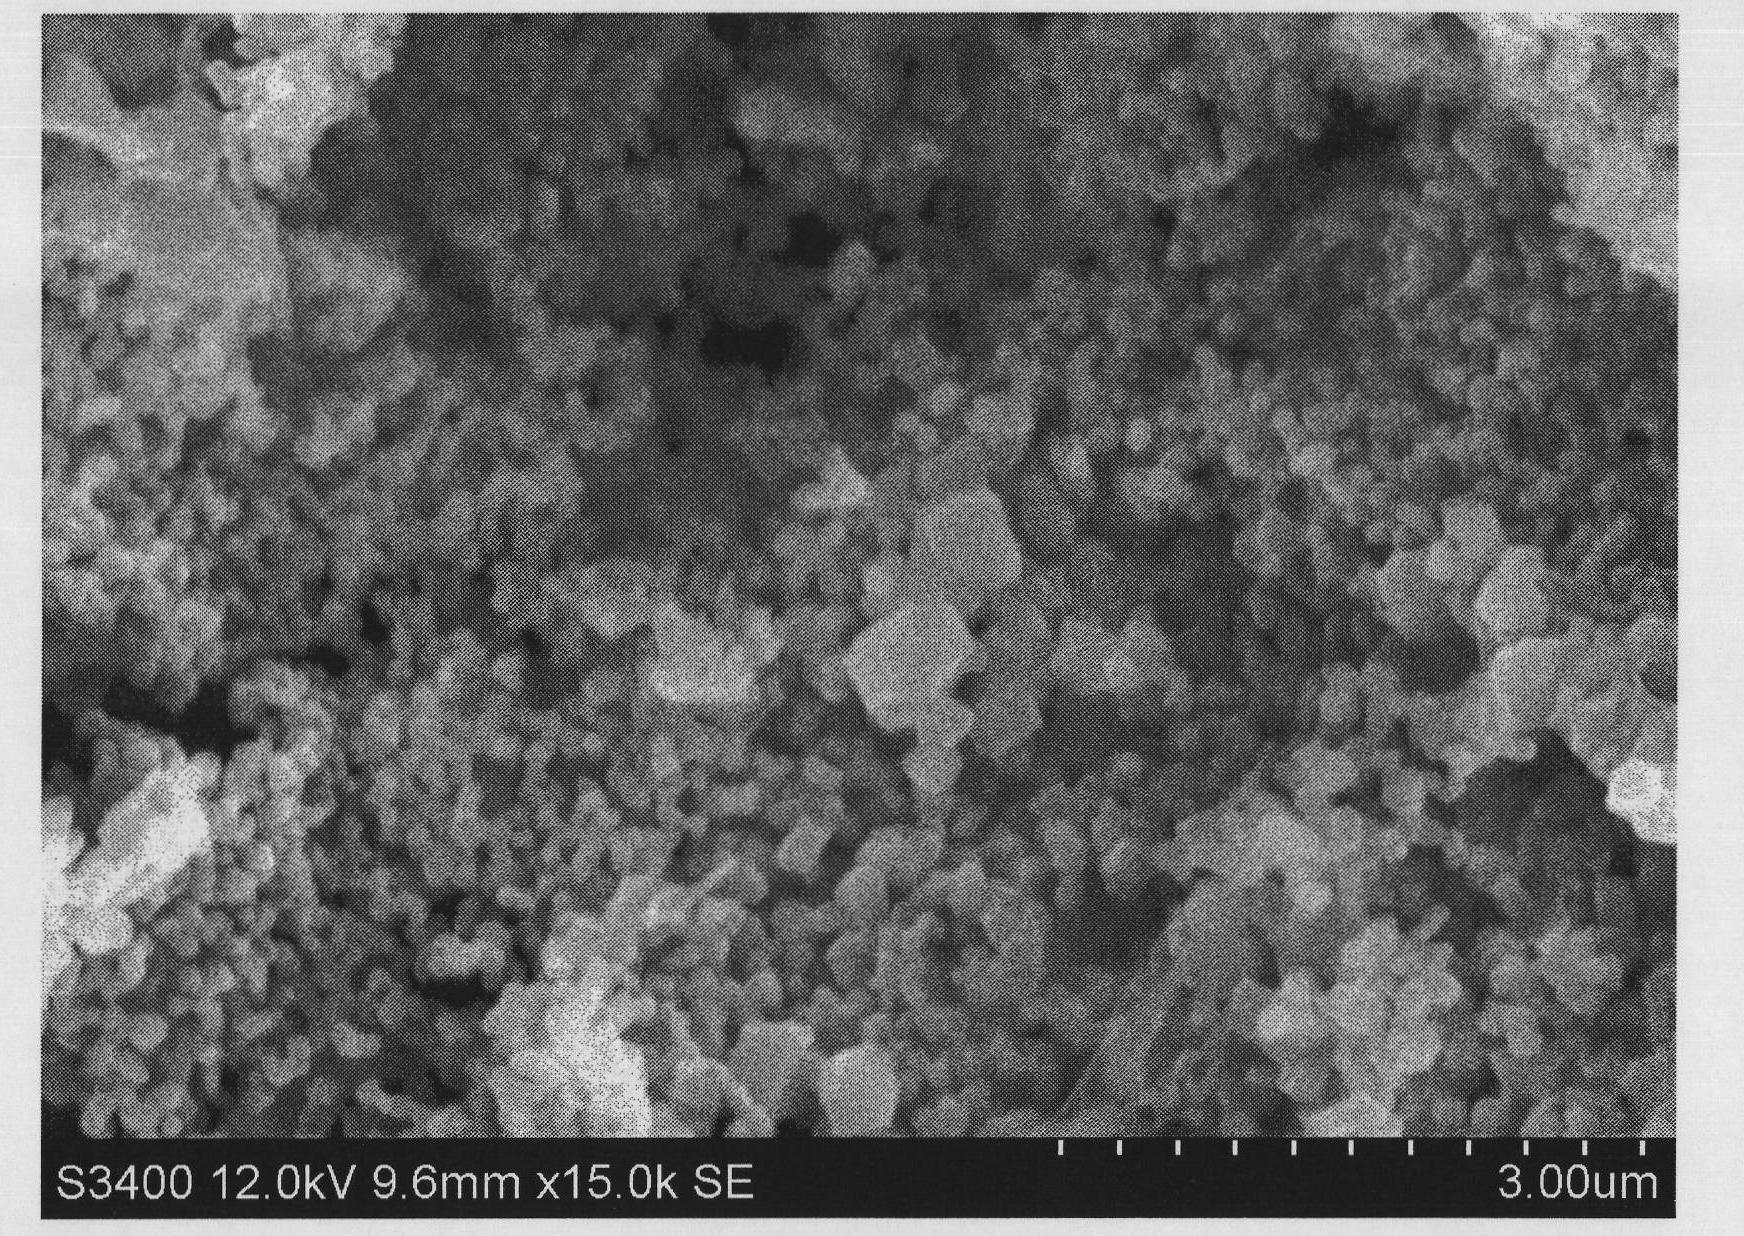 Ultra-fine boron carbide polycrystalline powder prepared through organic boron-containing precursor self-propagating method